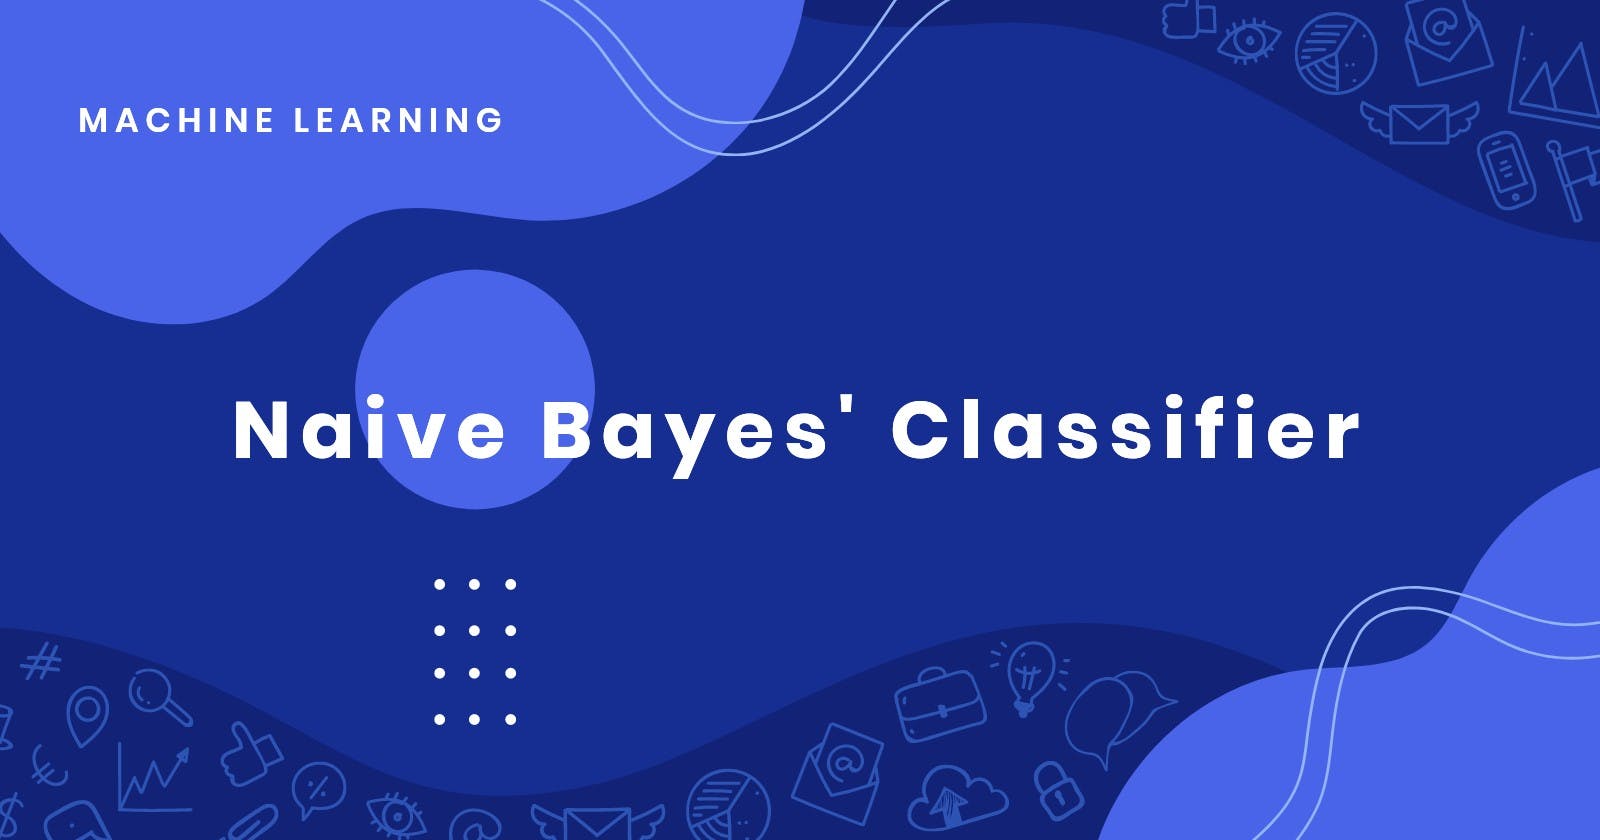 Naive Bayes' Classifier